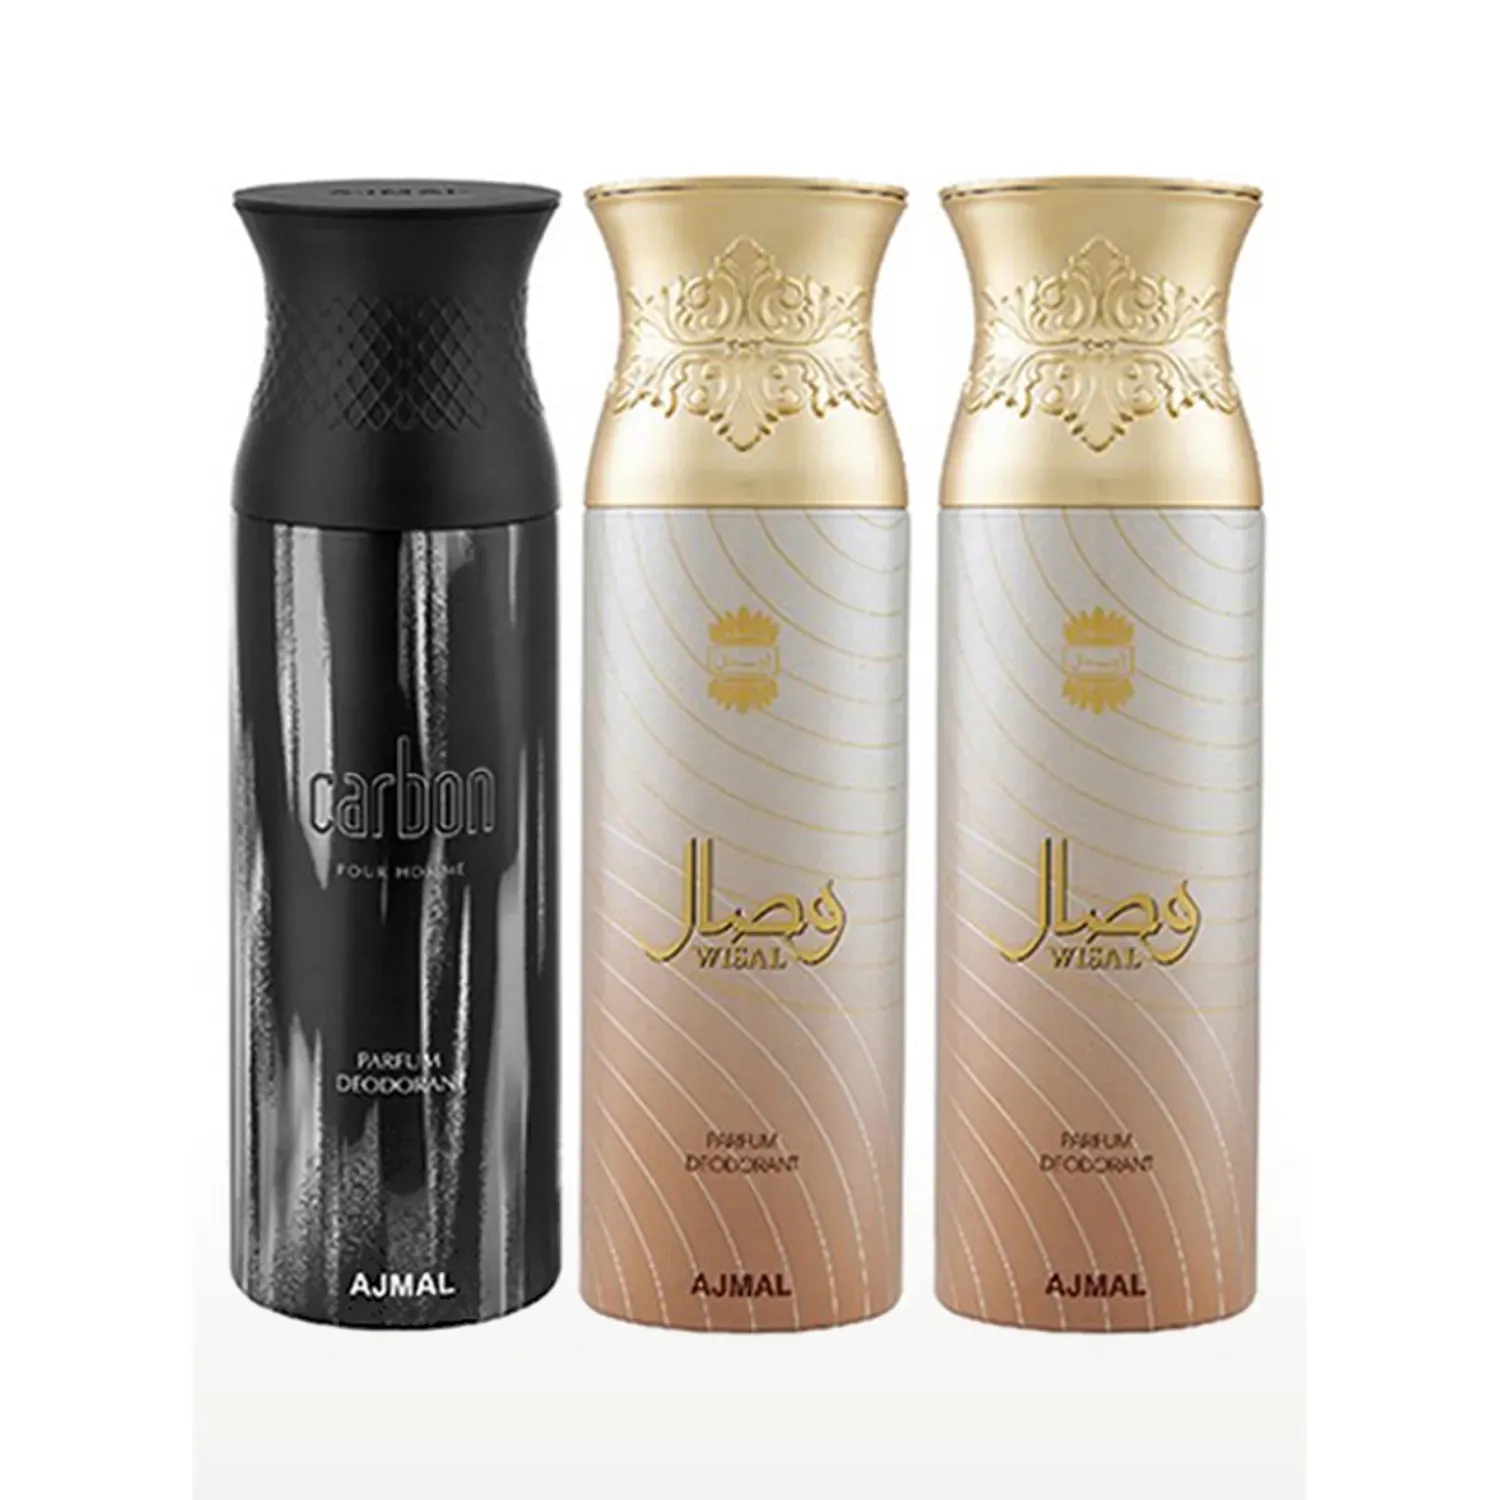 Ajmal Carbon & Wisal Deo & Wisal Deodorant Spray for Men & Women - Pack of 3 (200ml Each)